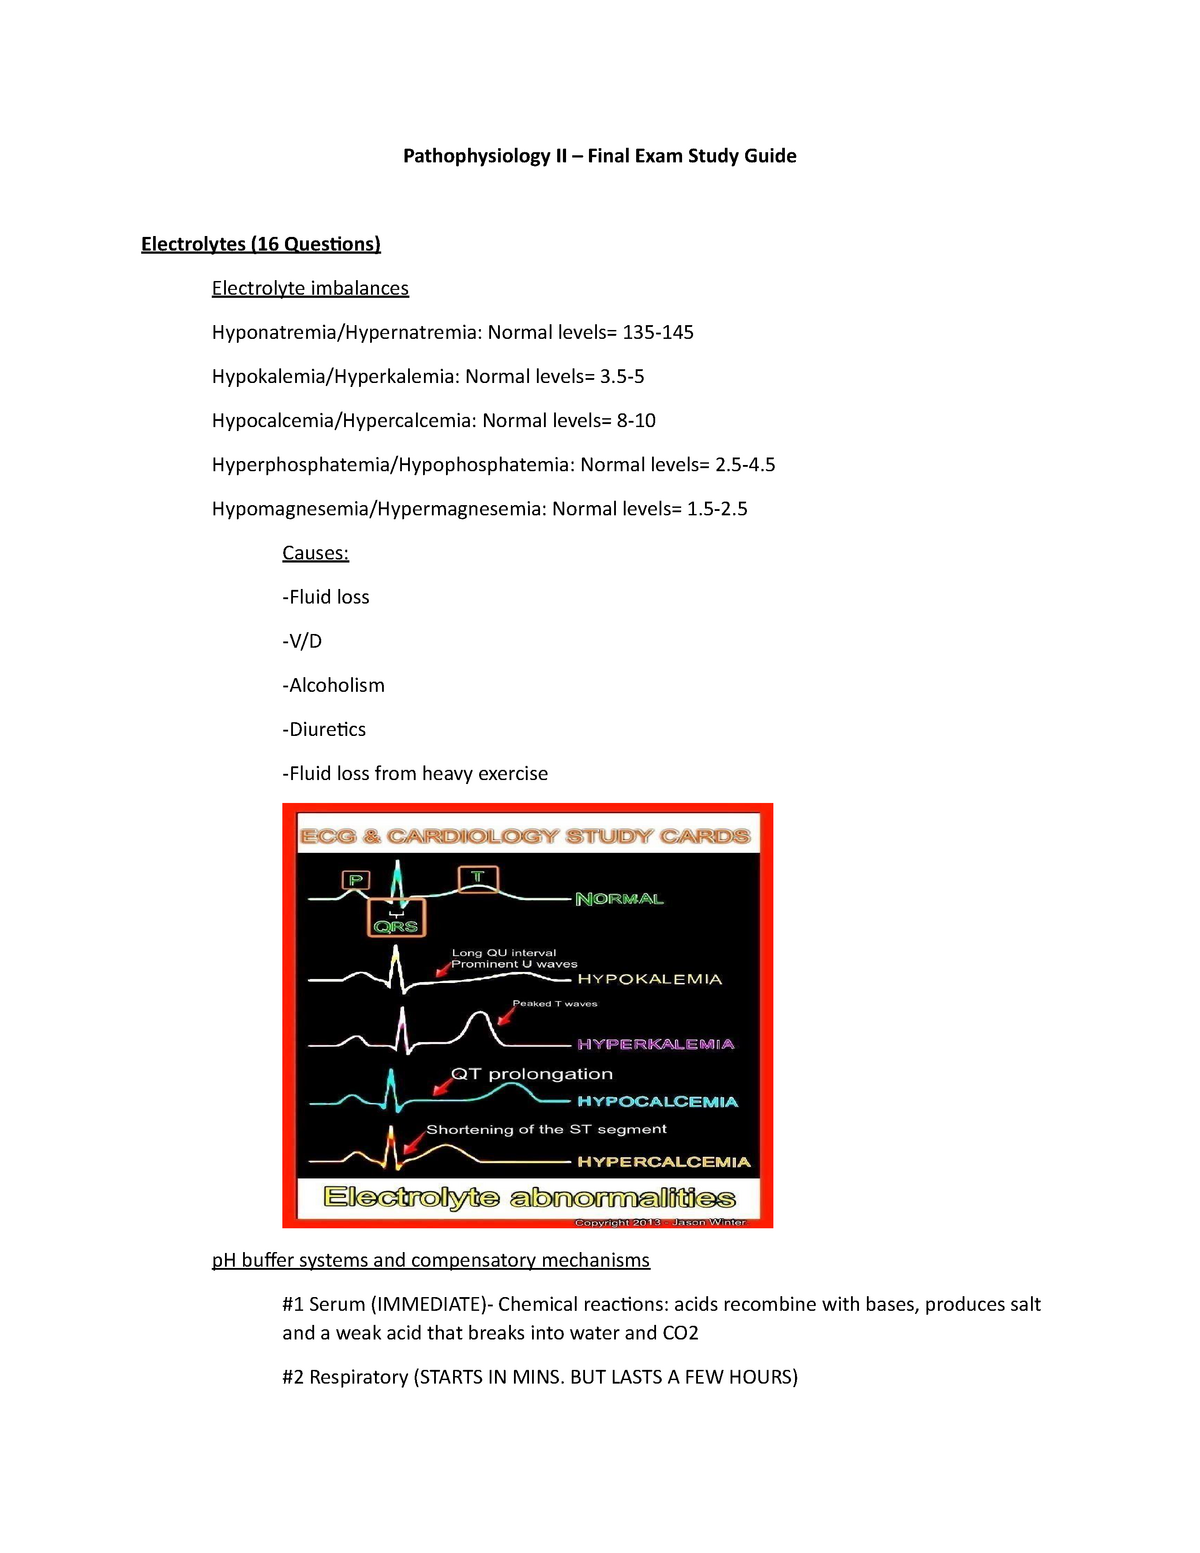 Patho 2 final exam study guide - Pathophysiology II – Final Exam Study  Guide Electrolytes (16 - Studocu